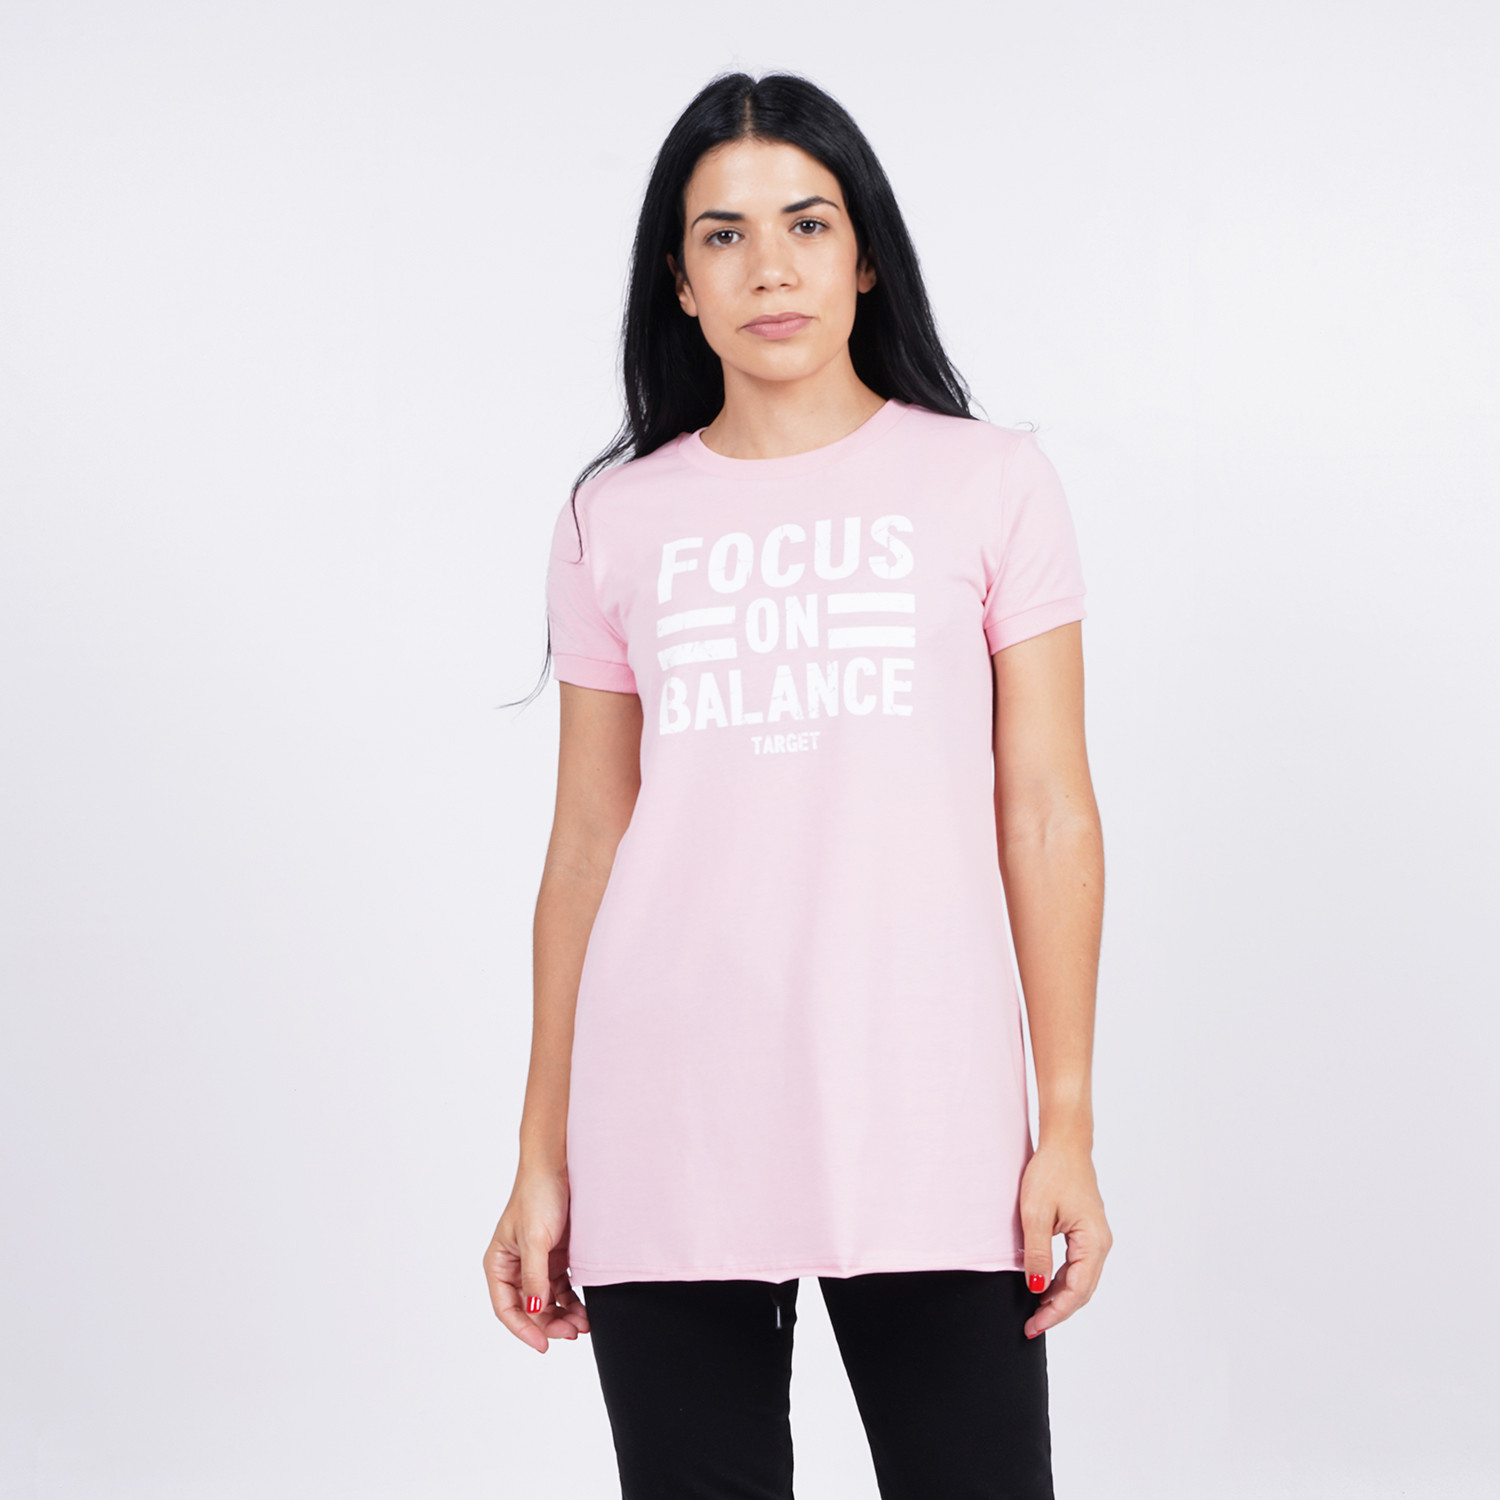 Target ''Focus'' Γυναικείο T-Shirt (9000079294_010)